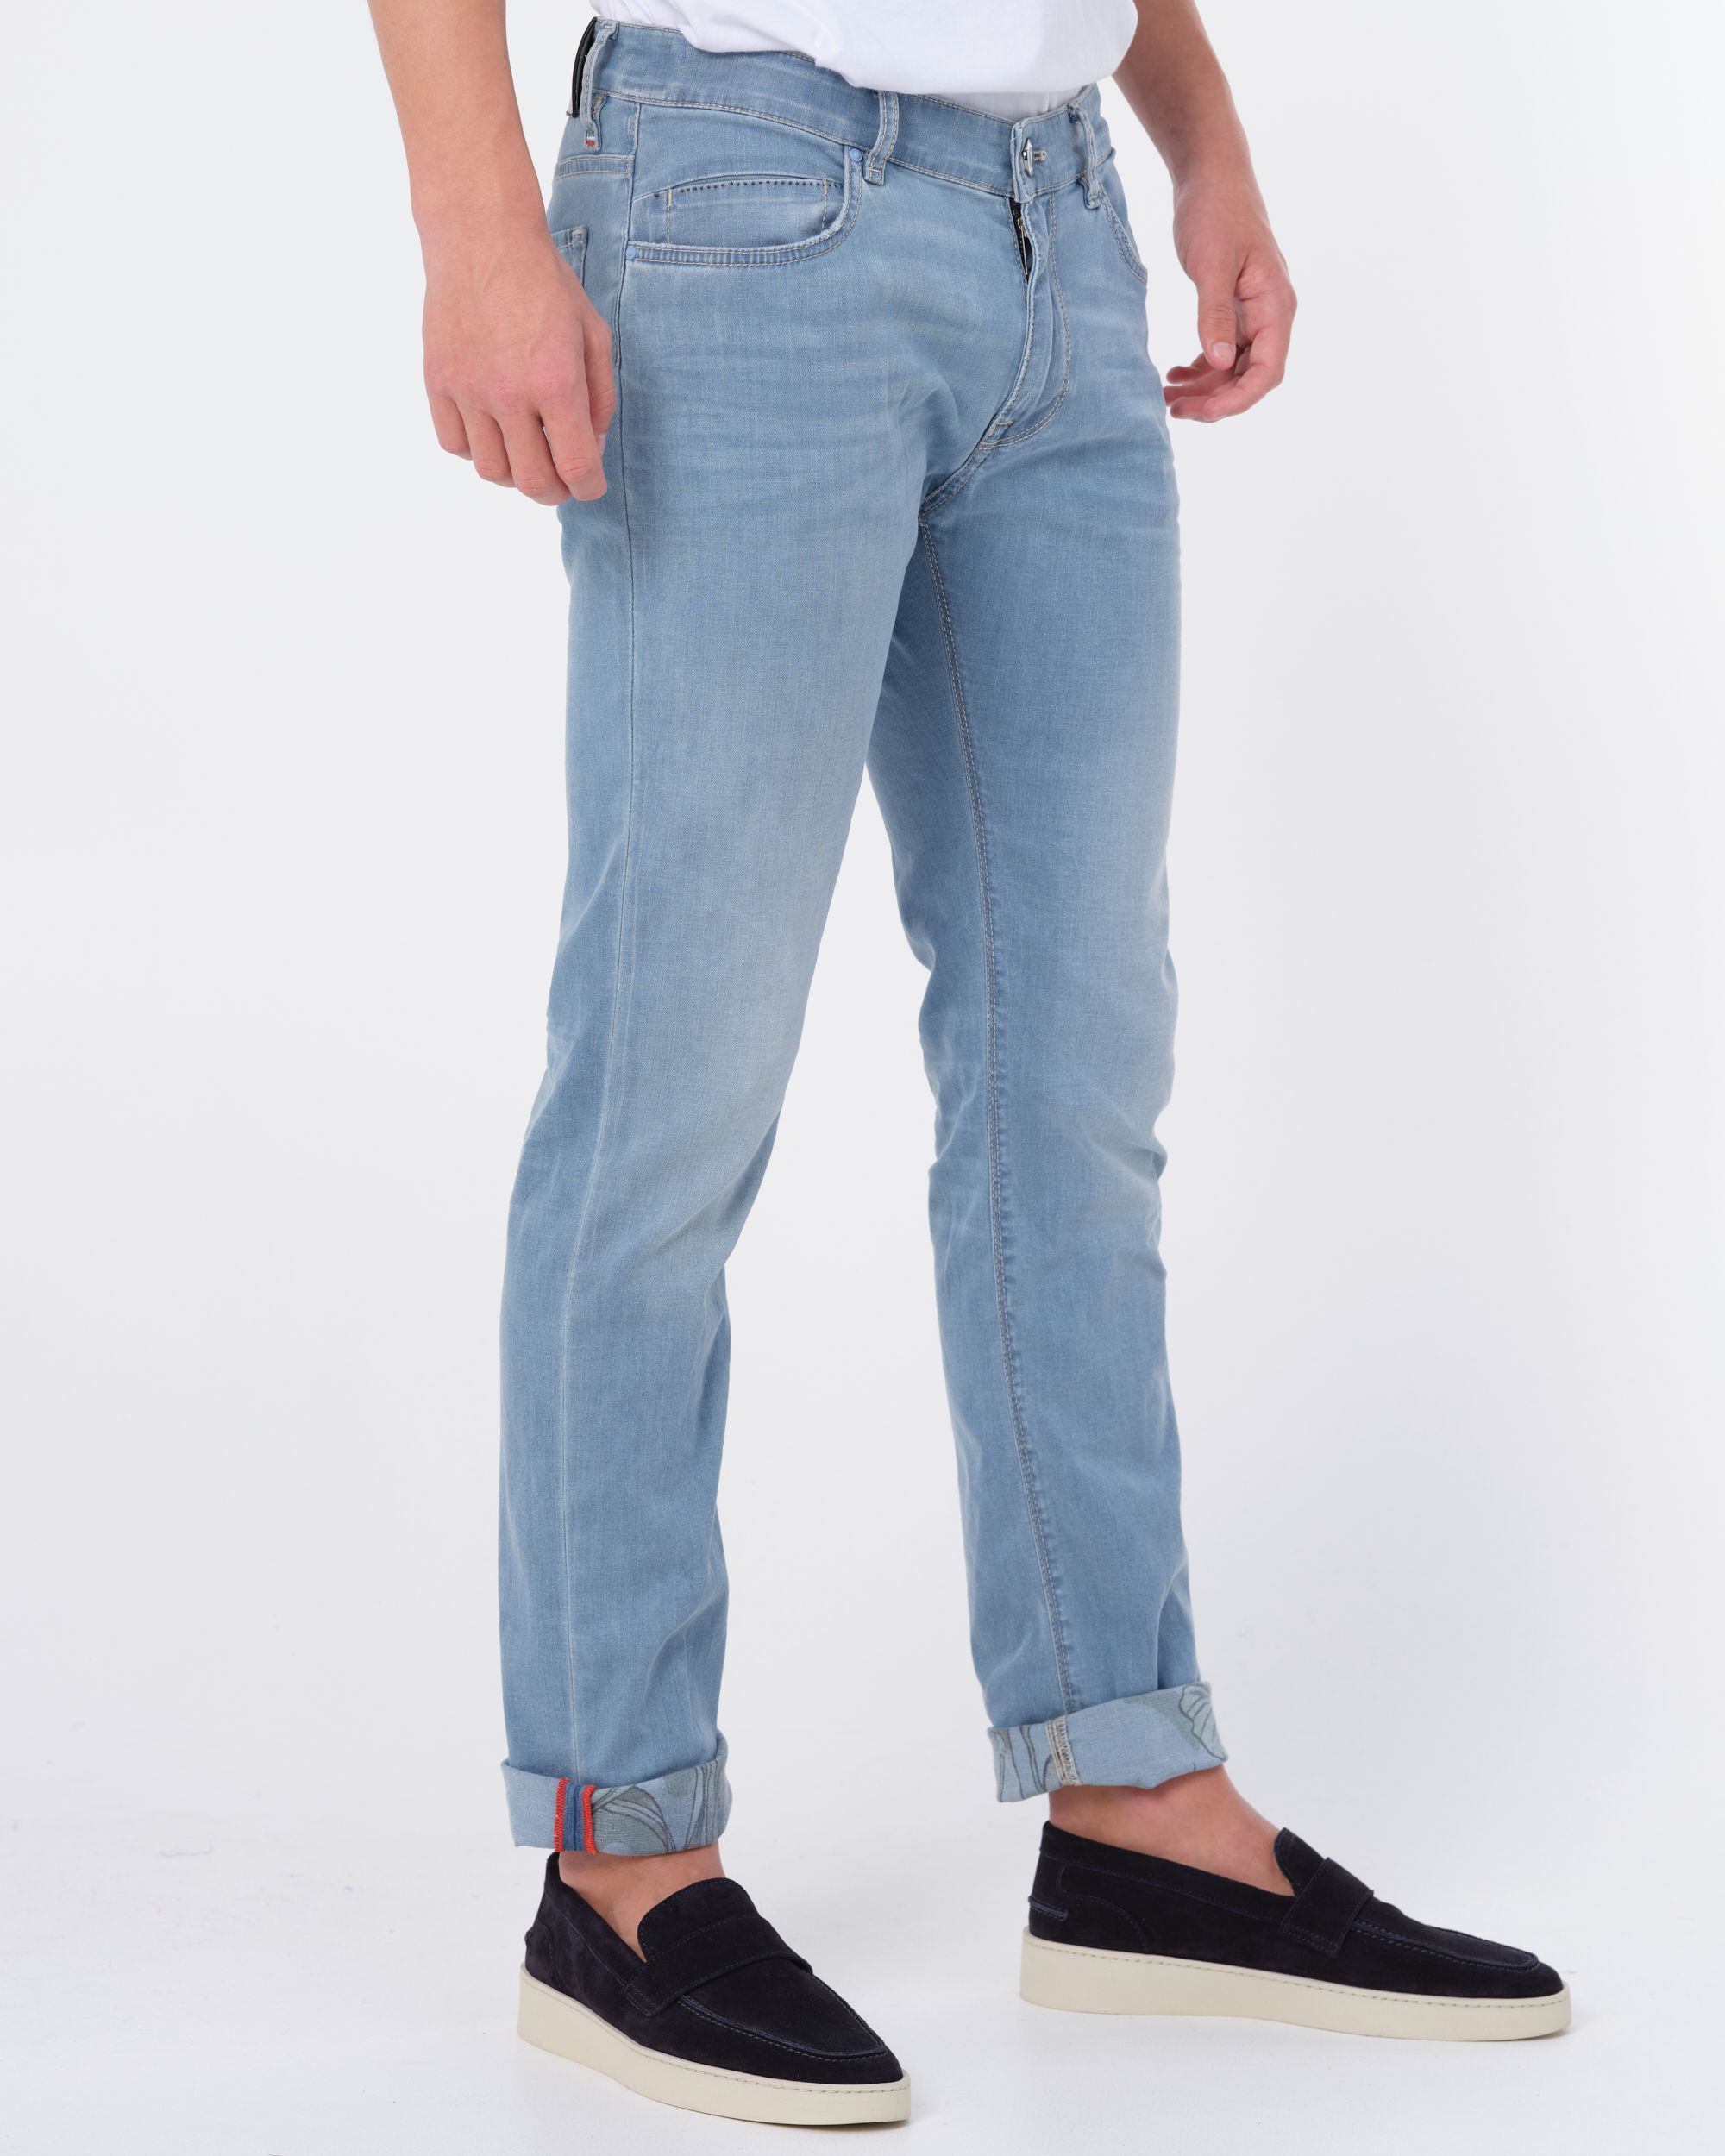 Mason's Jeans Donker blauw 083823-001-31